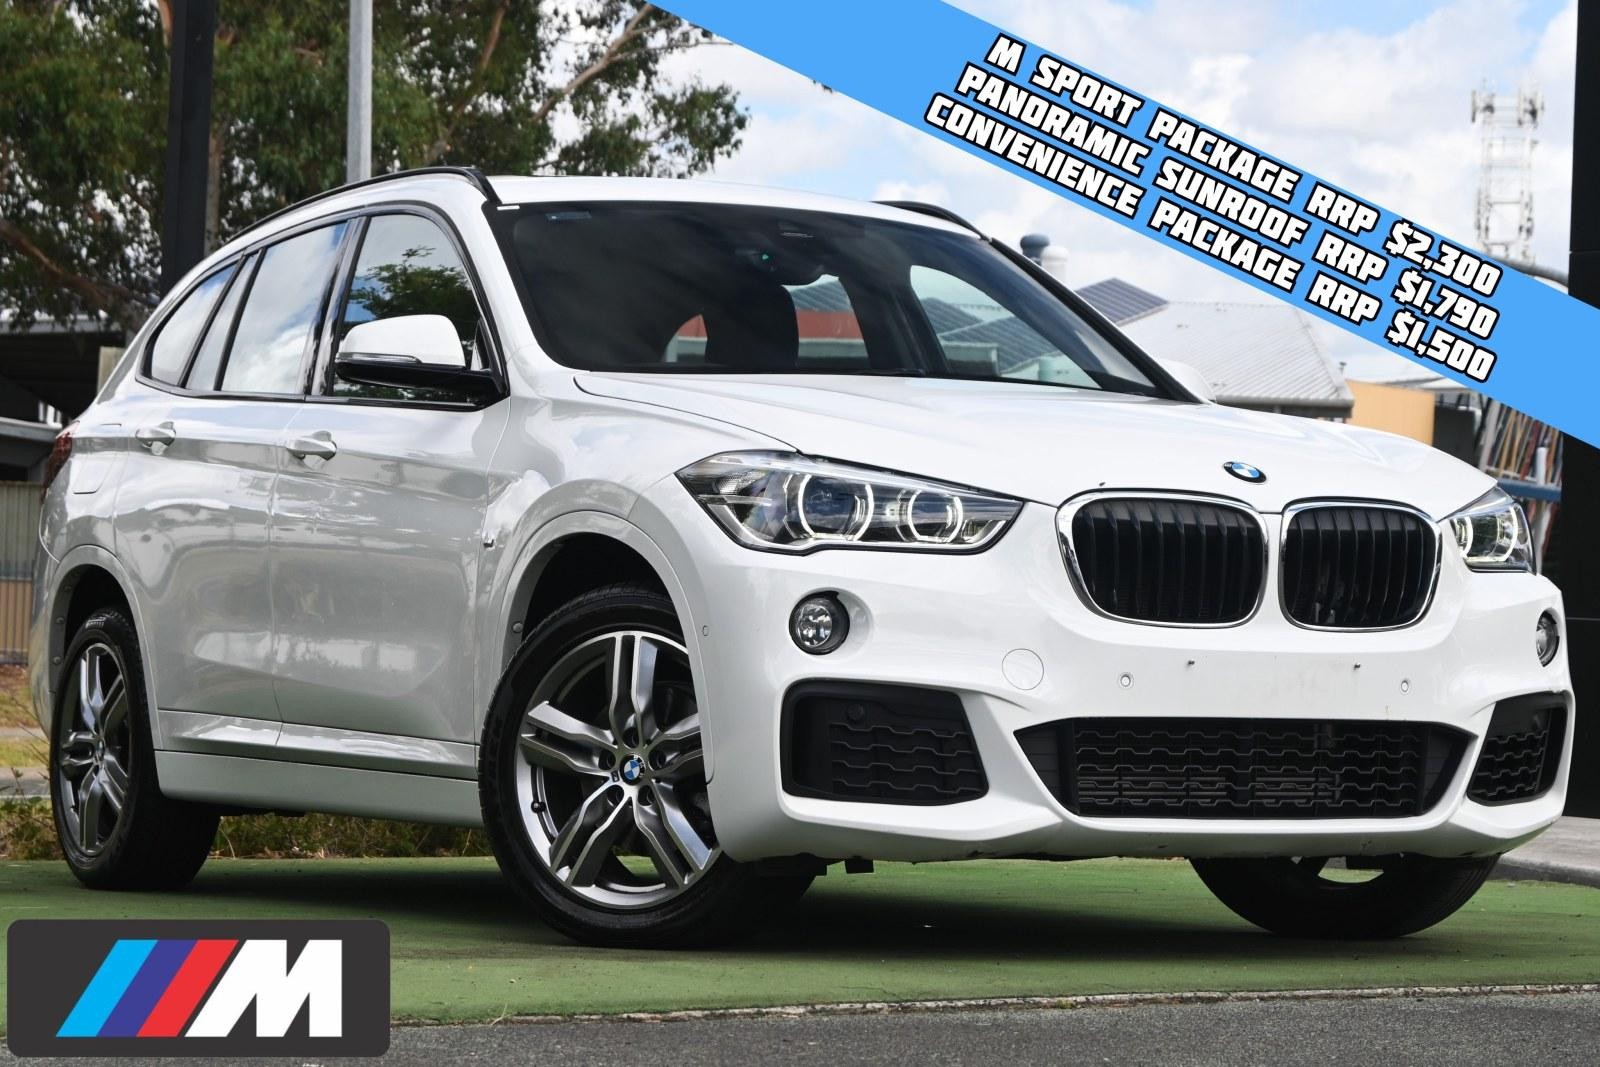 BMW X1 image 1